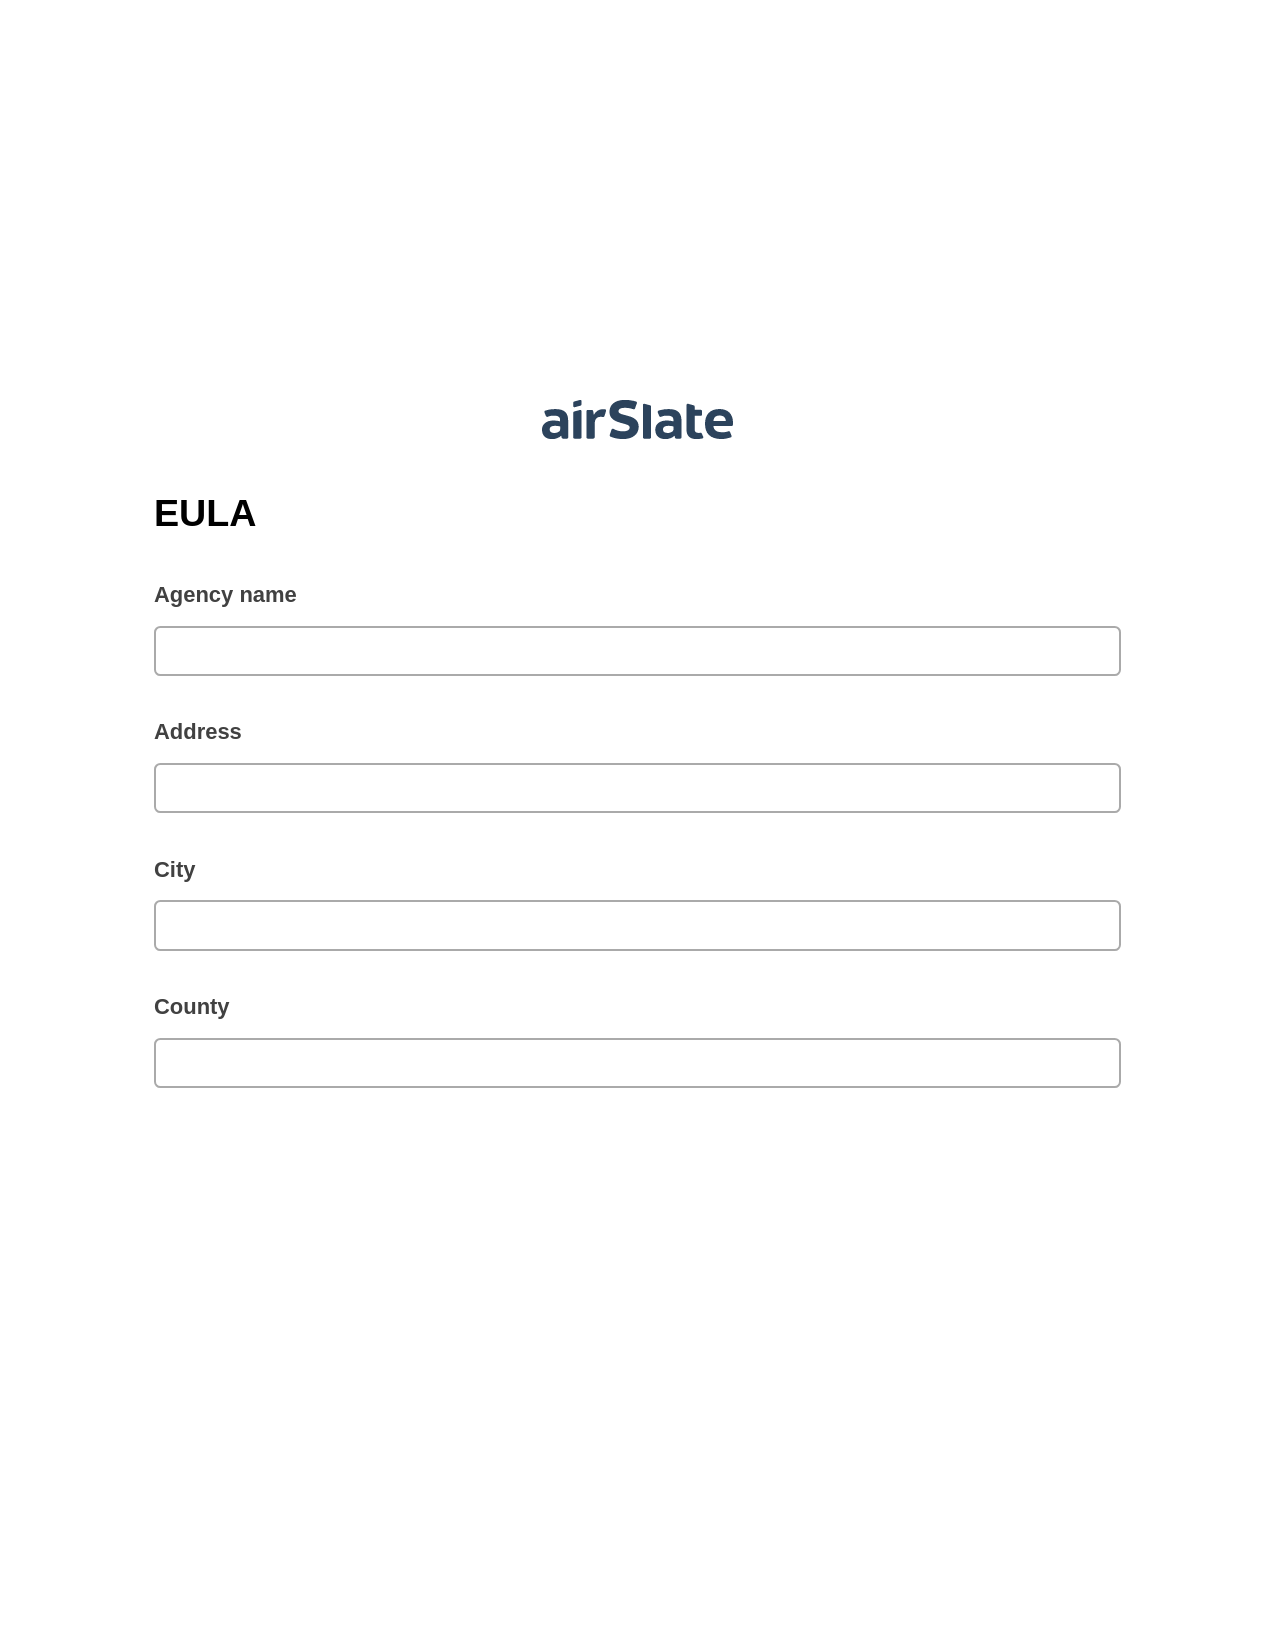 EULA Pre-fill from Salesforce Record Bot, Set signature type addon, Slack Notification Postfinish Bot